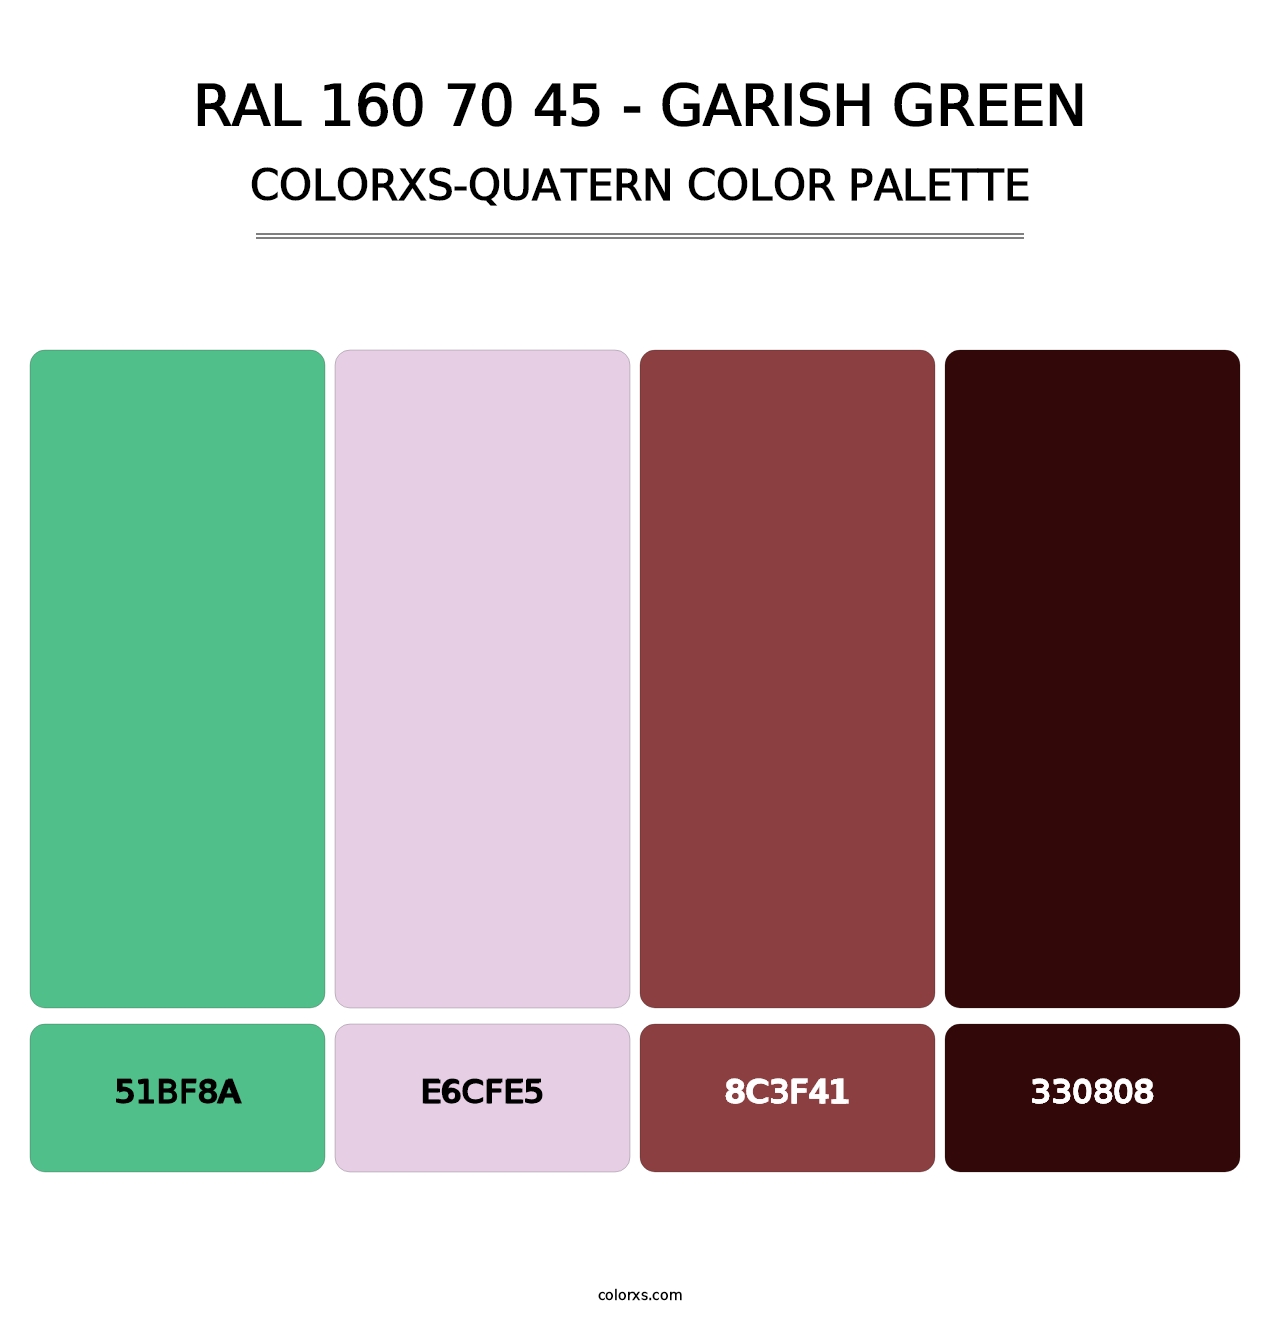 RAL 160 70 45 - Garish Green - Colorxs Quatern Palette